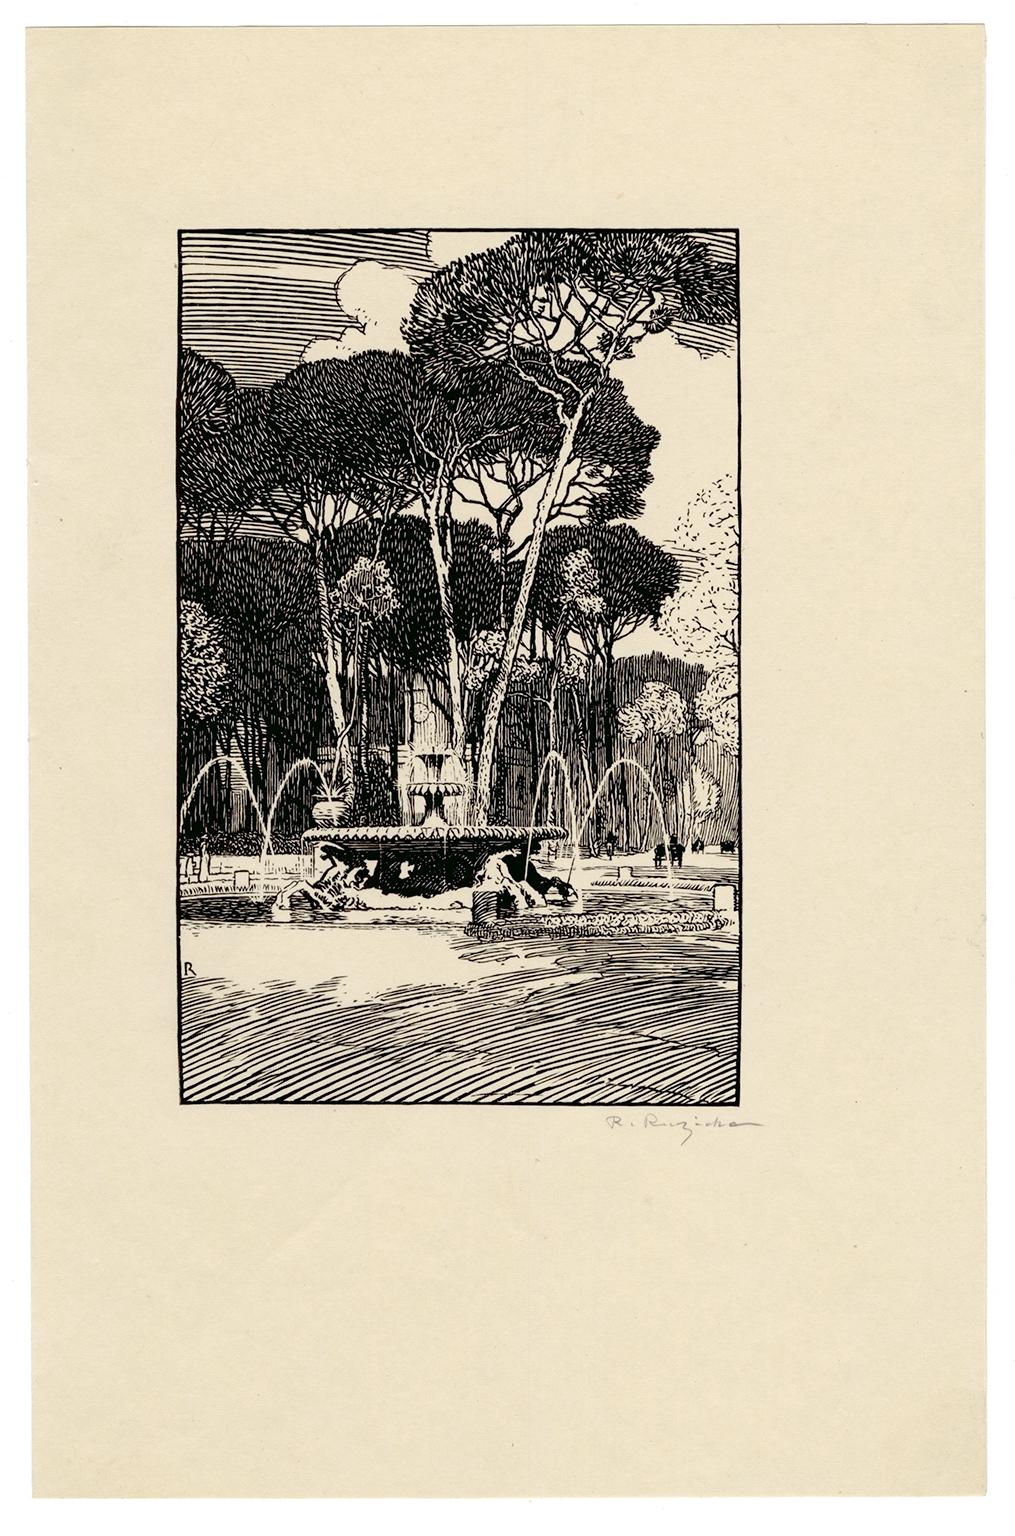 Fountain of Sea Horses, Rome — Early 20th Century - Print by Rudolph Ruzicka